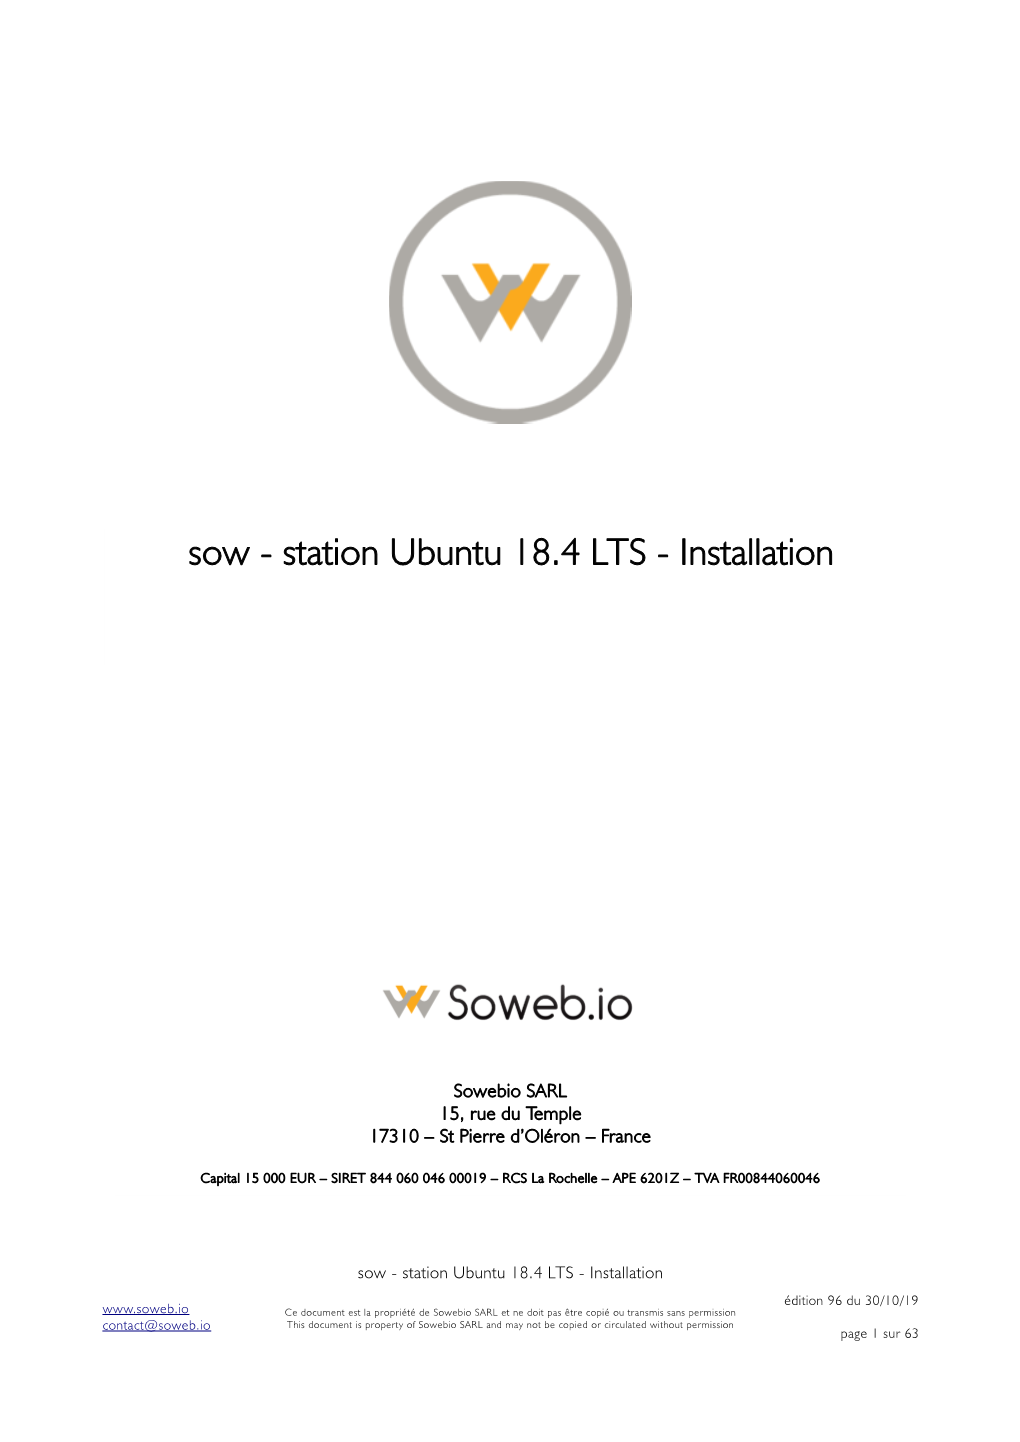 Sow - Station Ubuntu 18.4 LTS - Installation